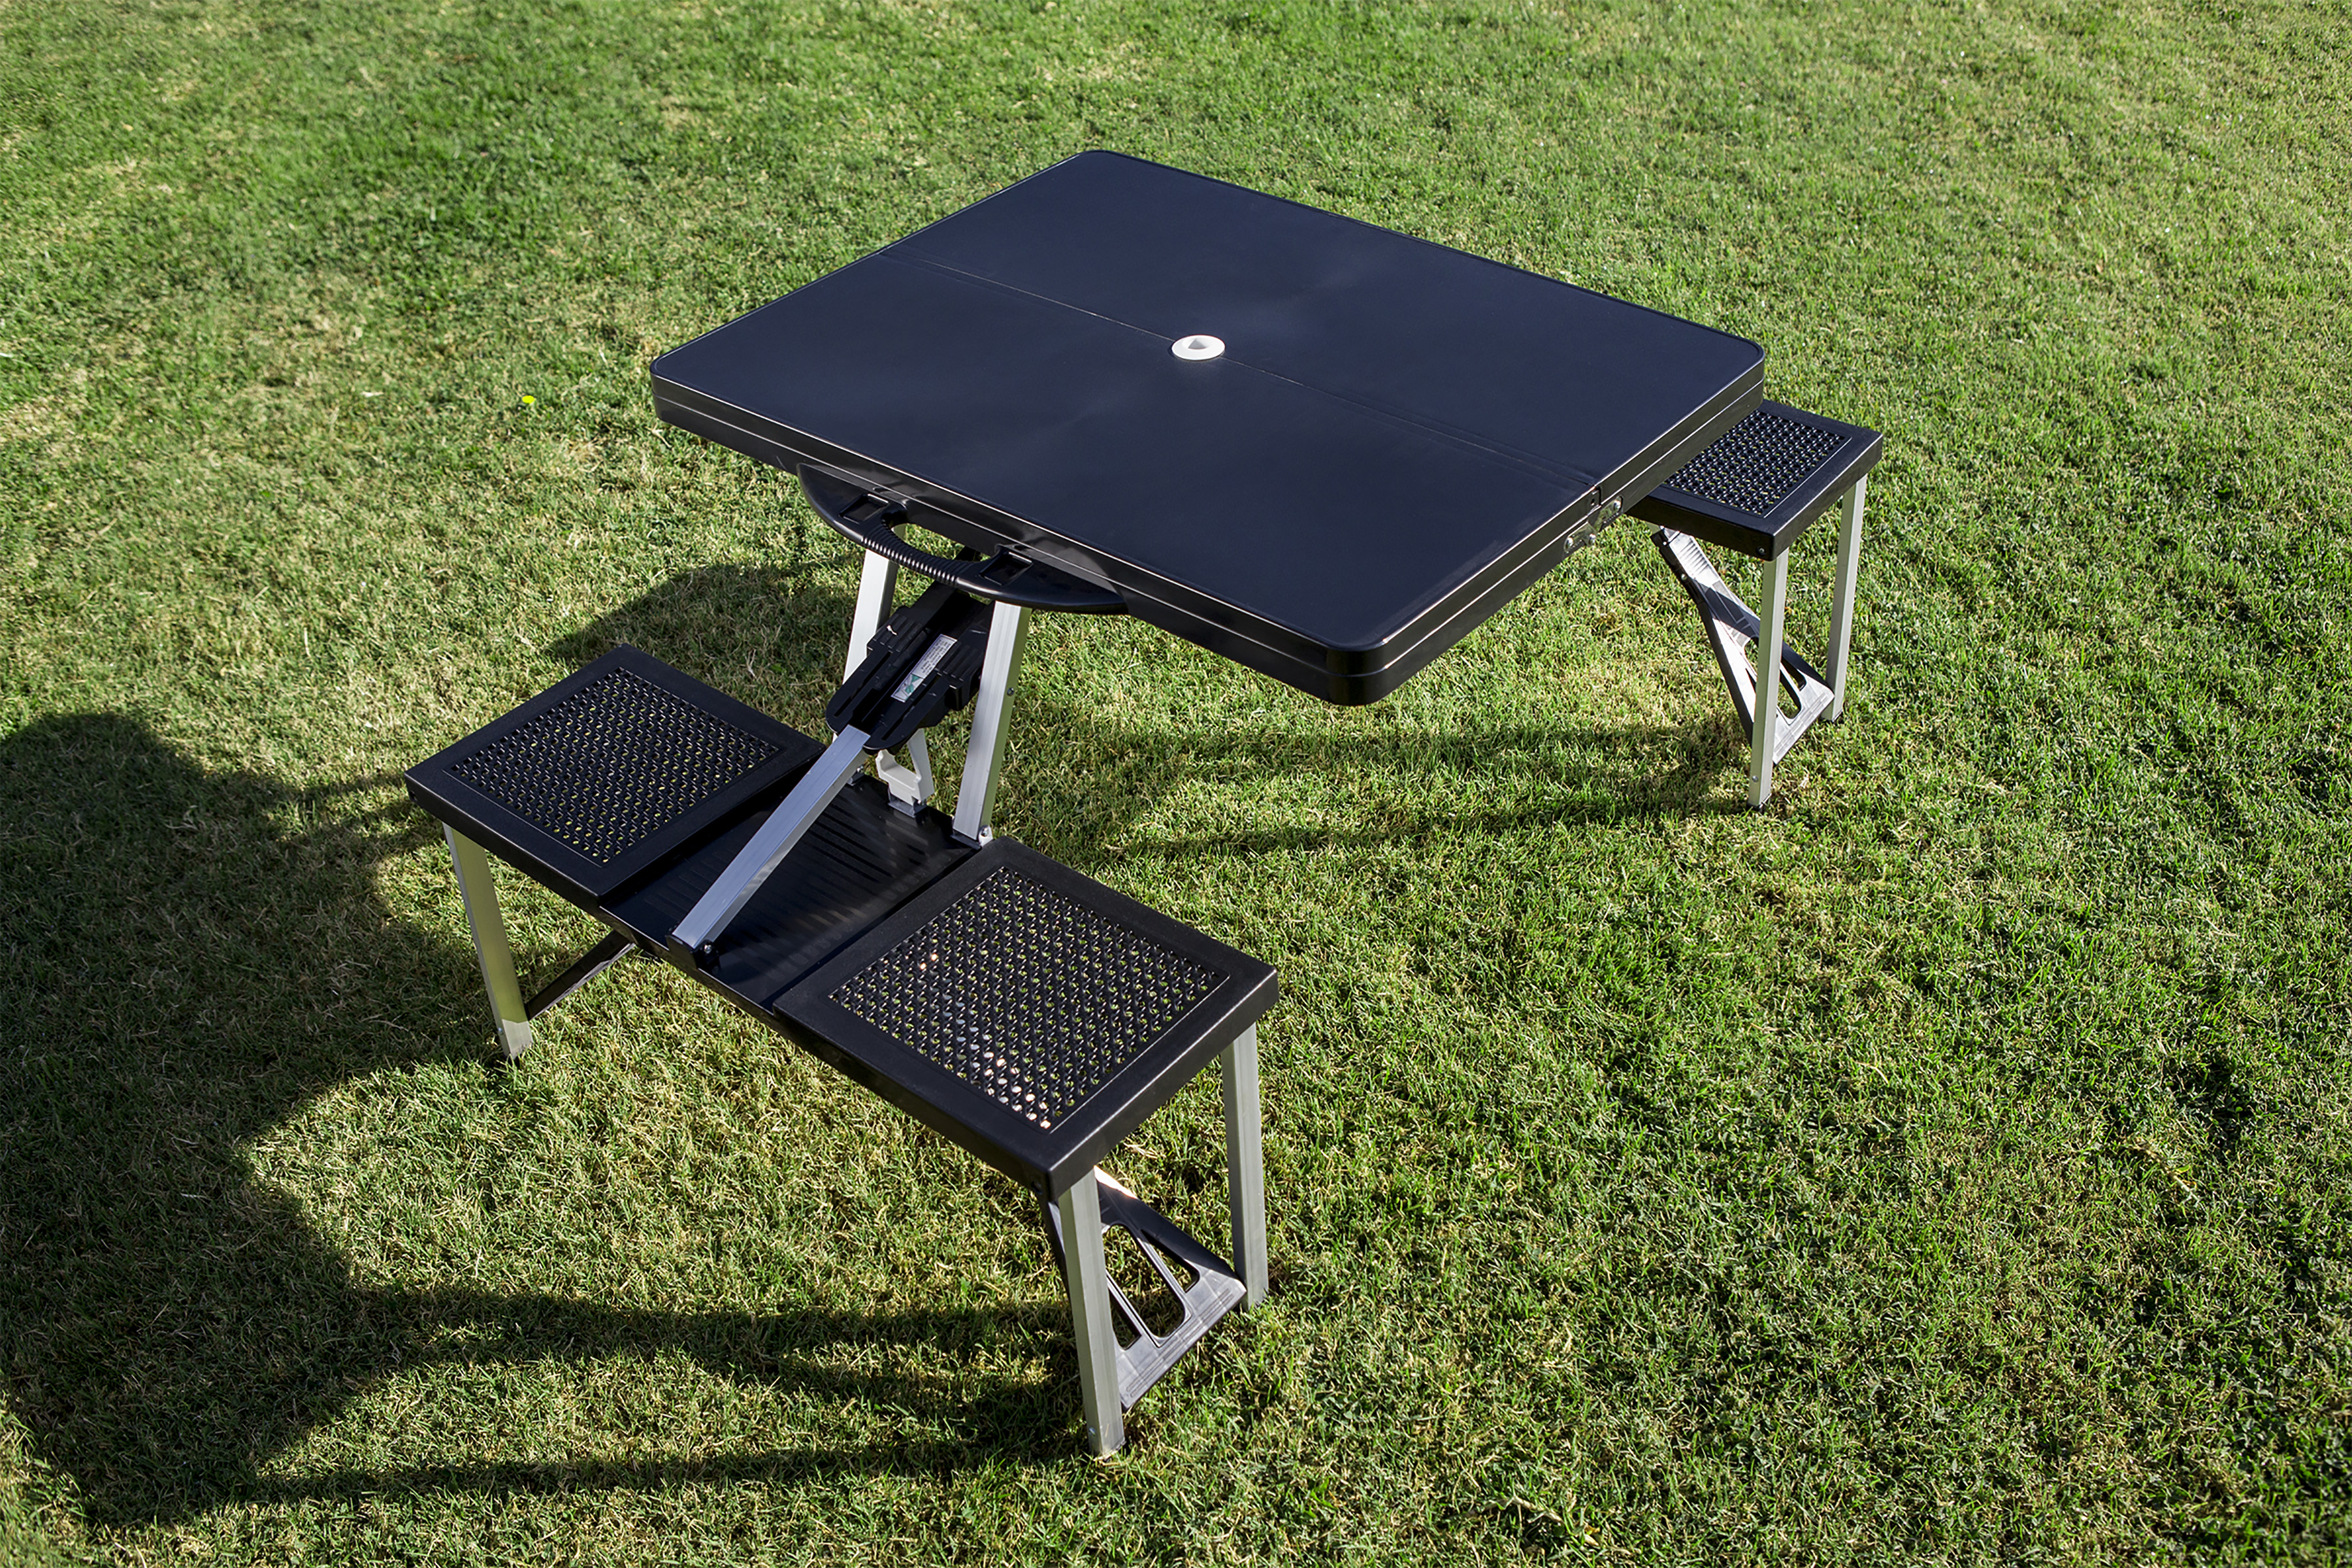 Football Field - Atlanta Falcons - Picnic Table Portable Folding Table with Seats